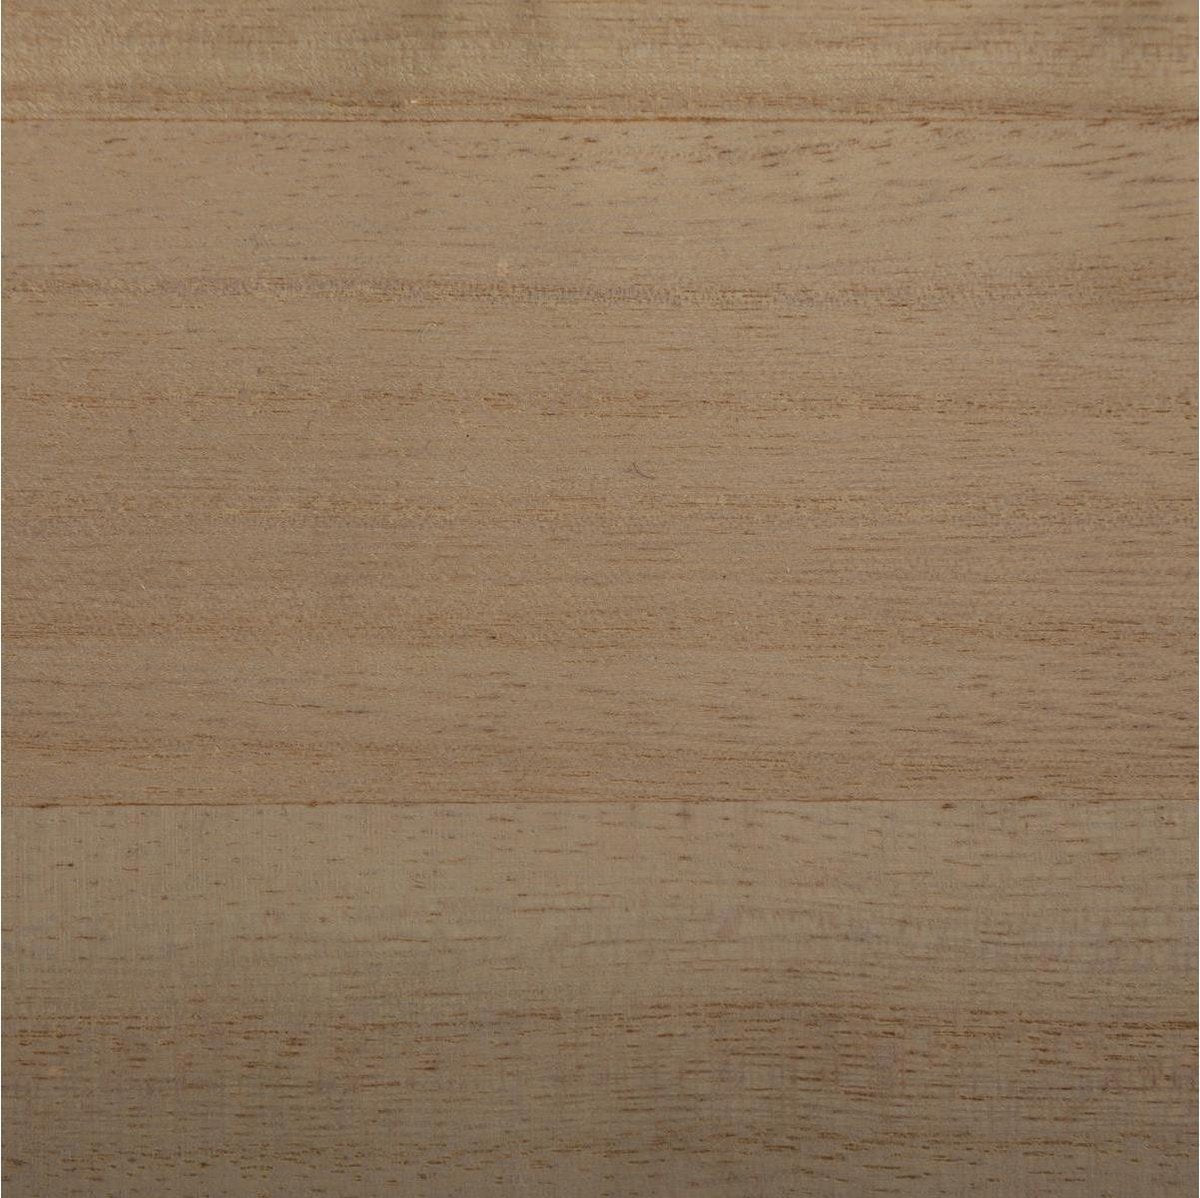 Wandplank - hout - metaal - zwart - wandrek - 48 cm